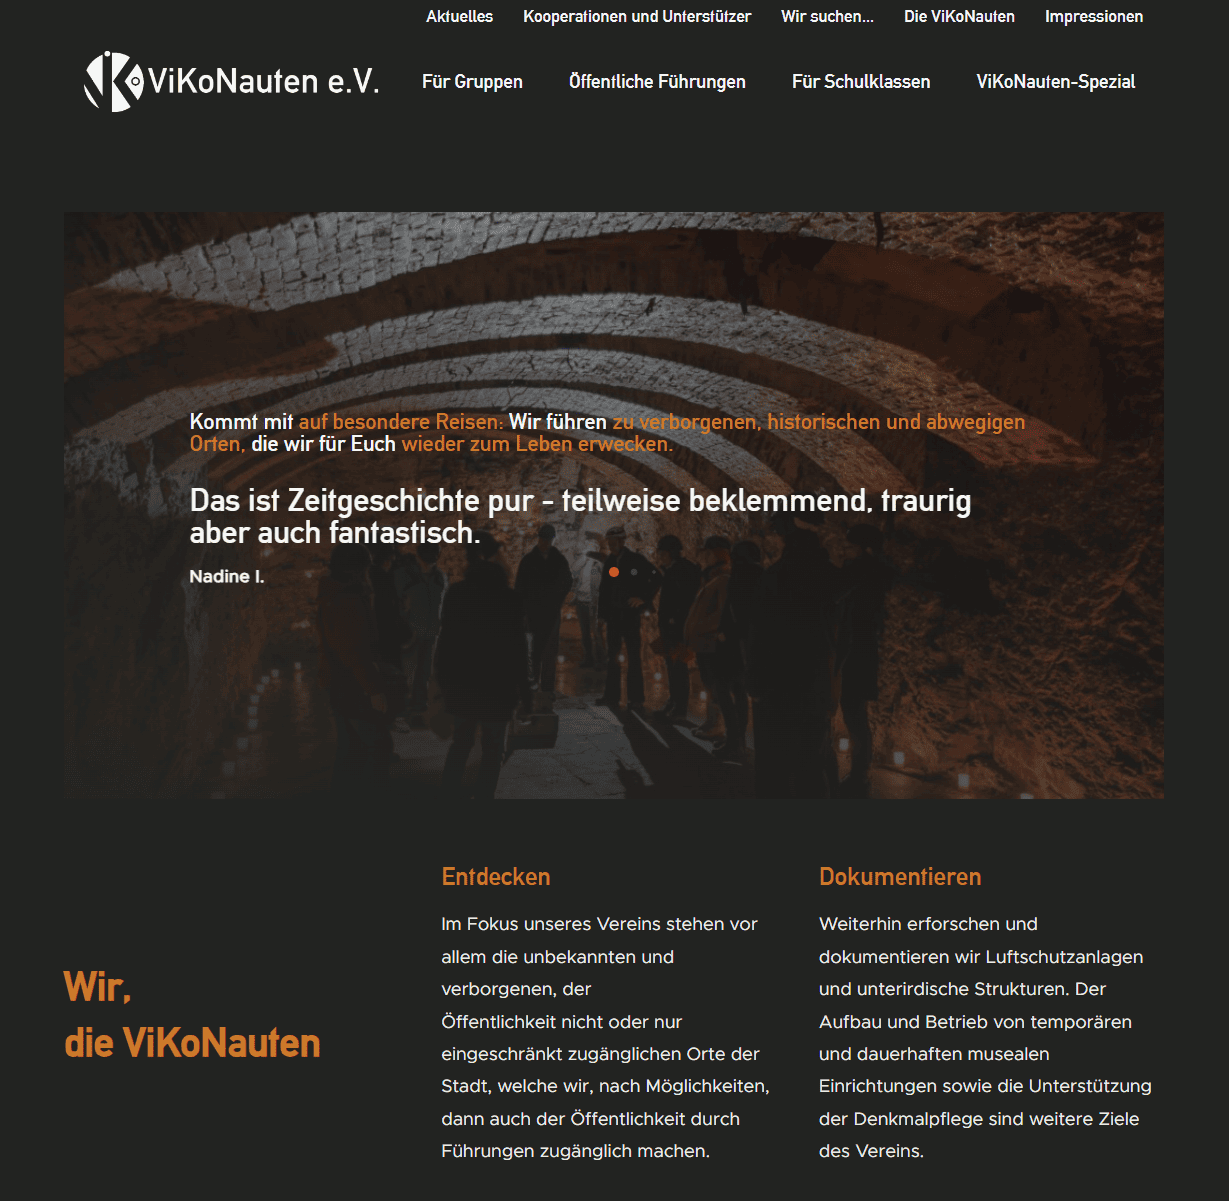 Thomas Ulbricht Webdesign Referenz: Vikonauten e.V. Kassel